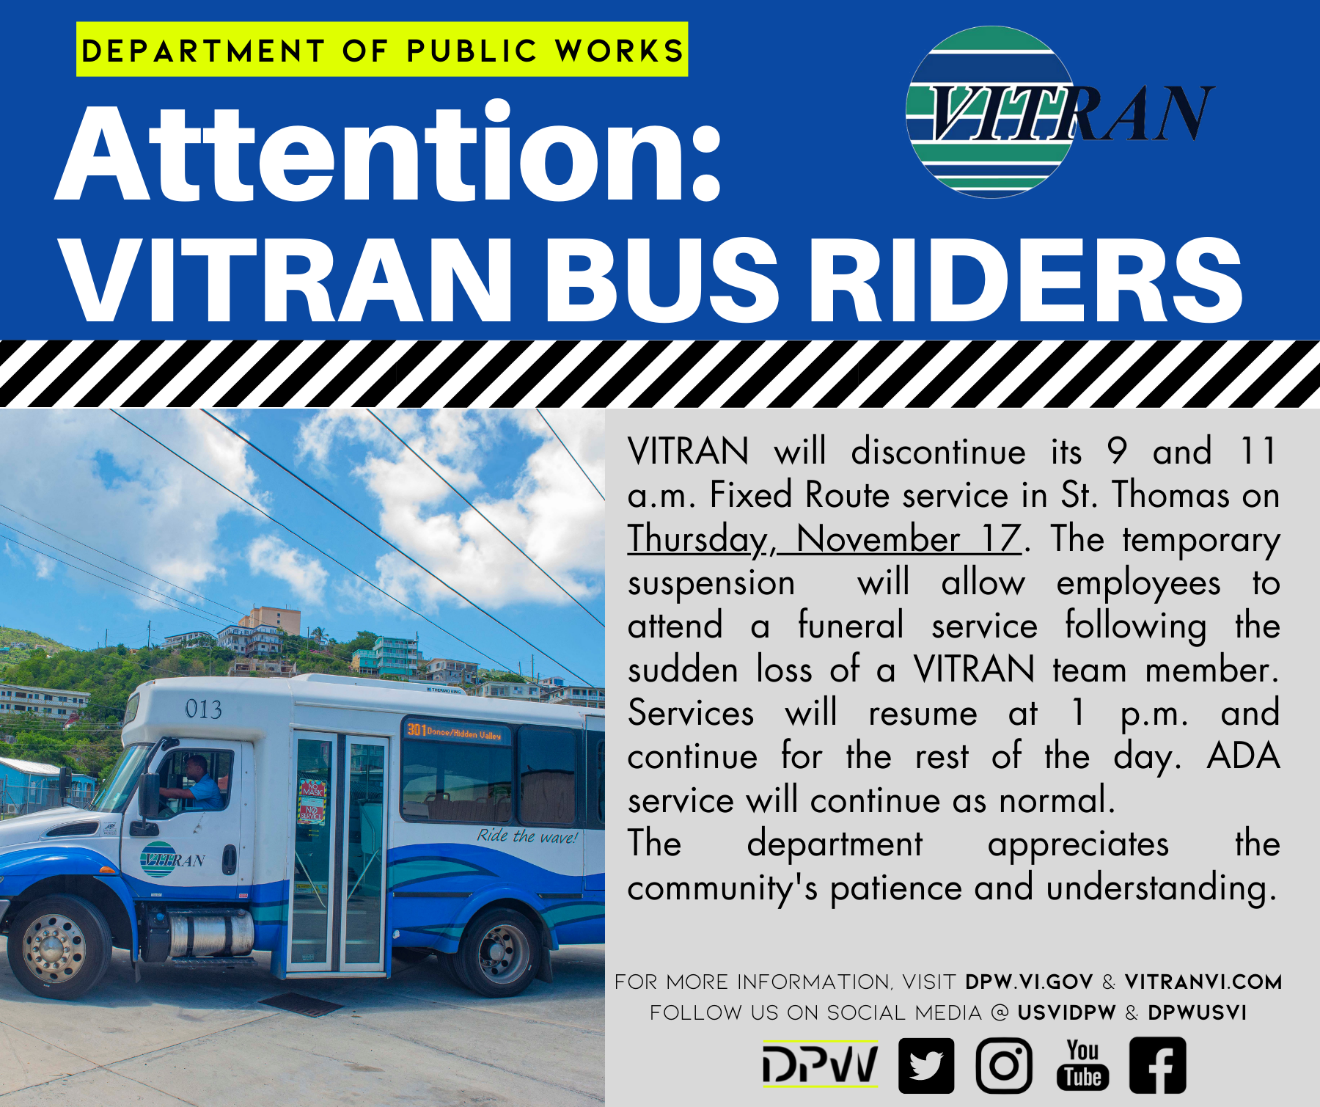 VITRAN To Shut Down Bus Service Temporarily In St. Thomas On Thursday